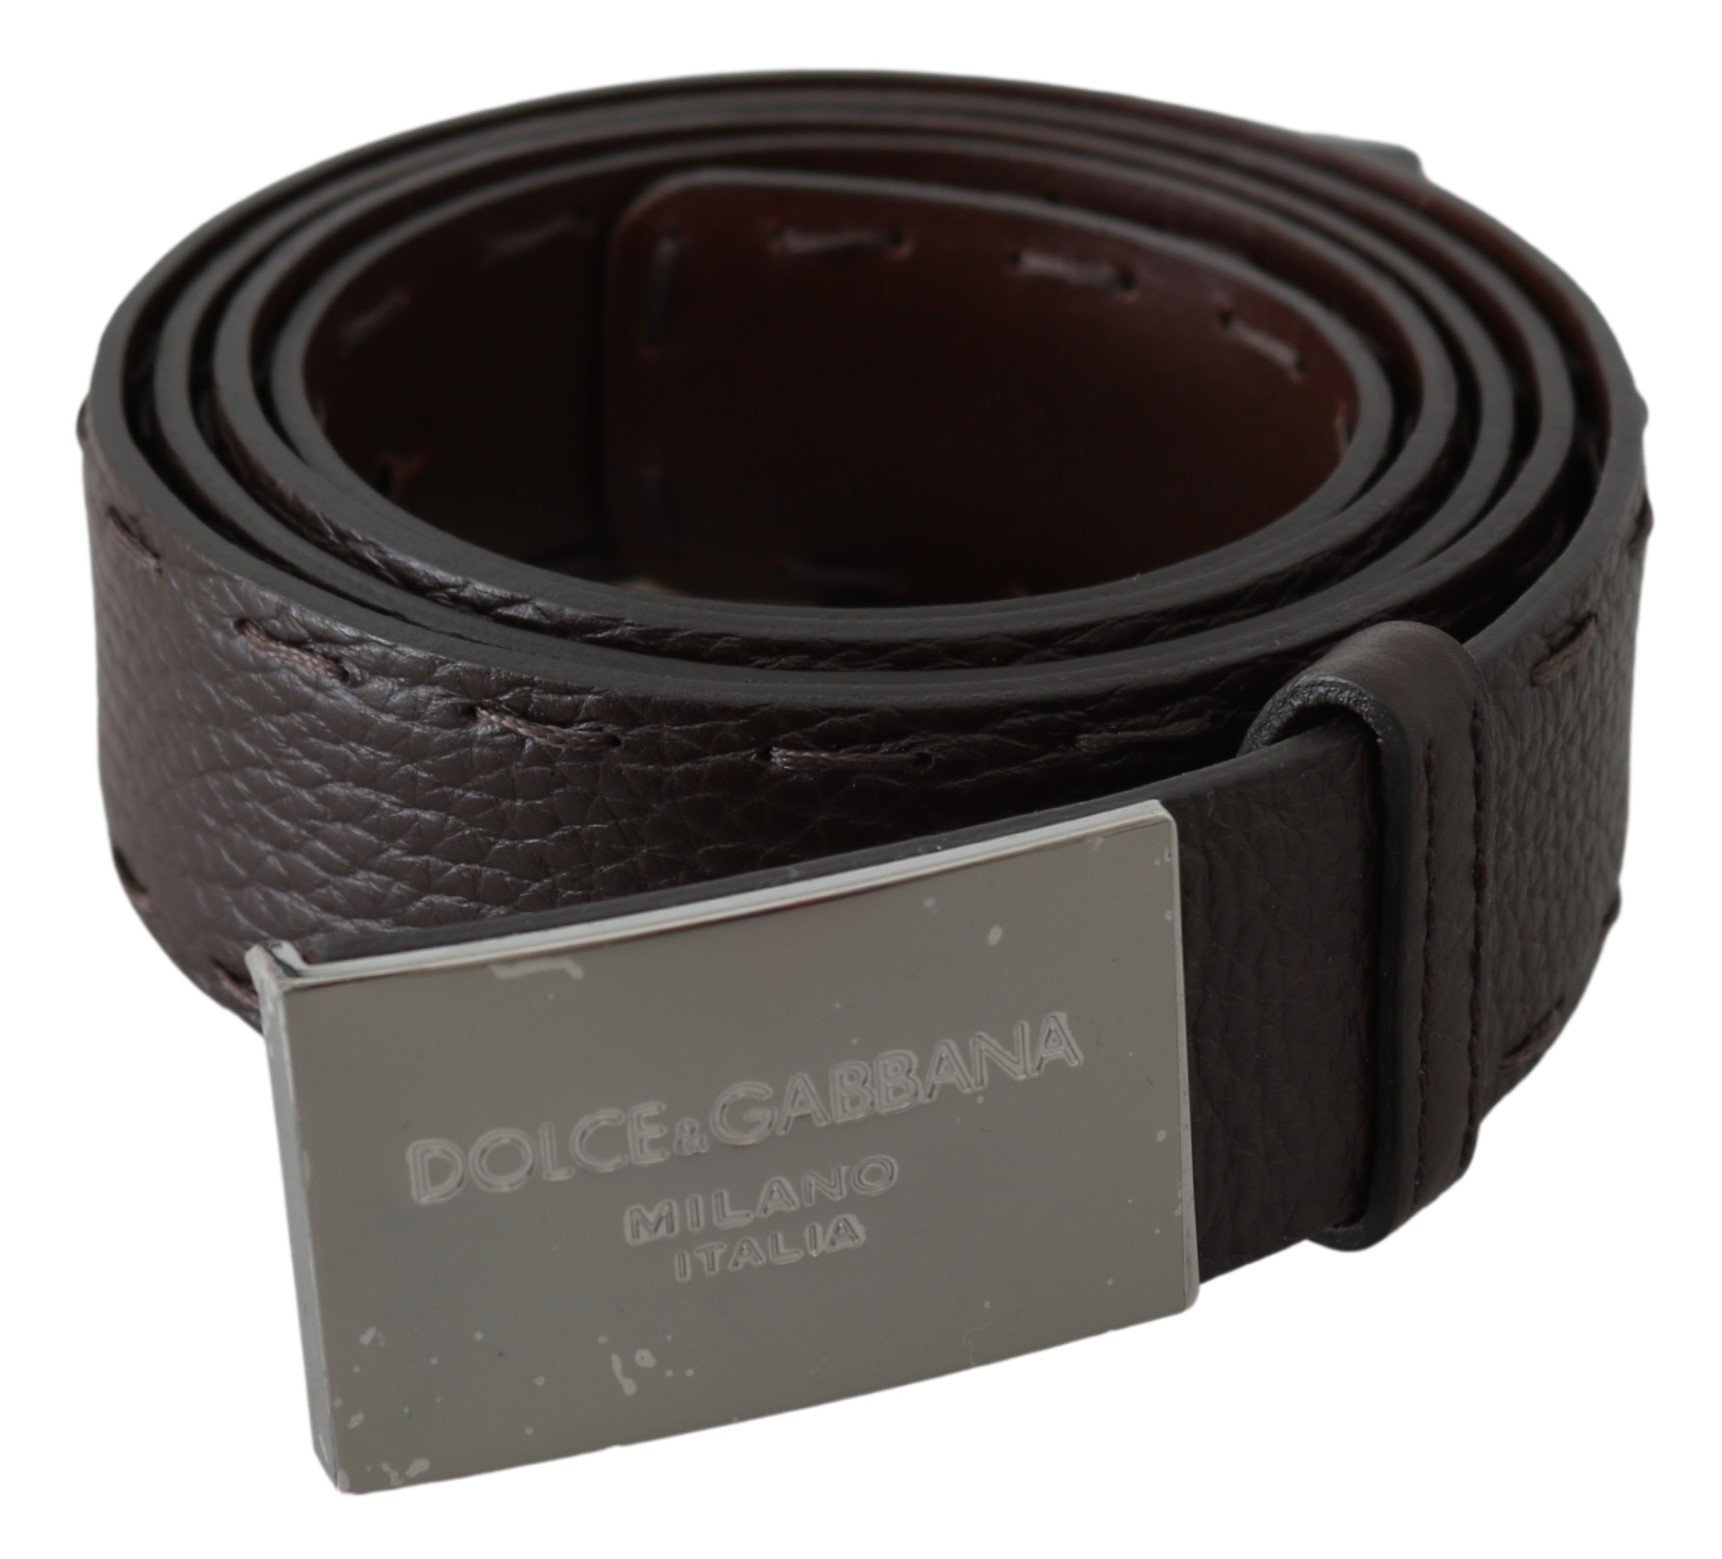 Dolce & Gabbana Men's Pattern Leather DG Logo Buckle Belt Brown BEL60672 - 100 cm / 40 Inches